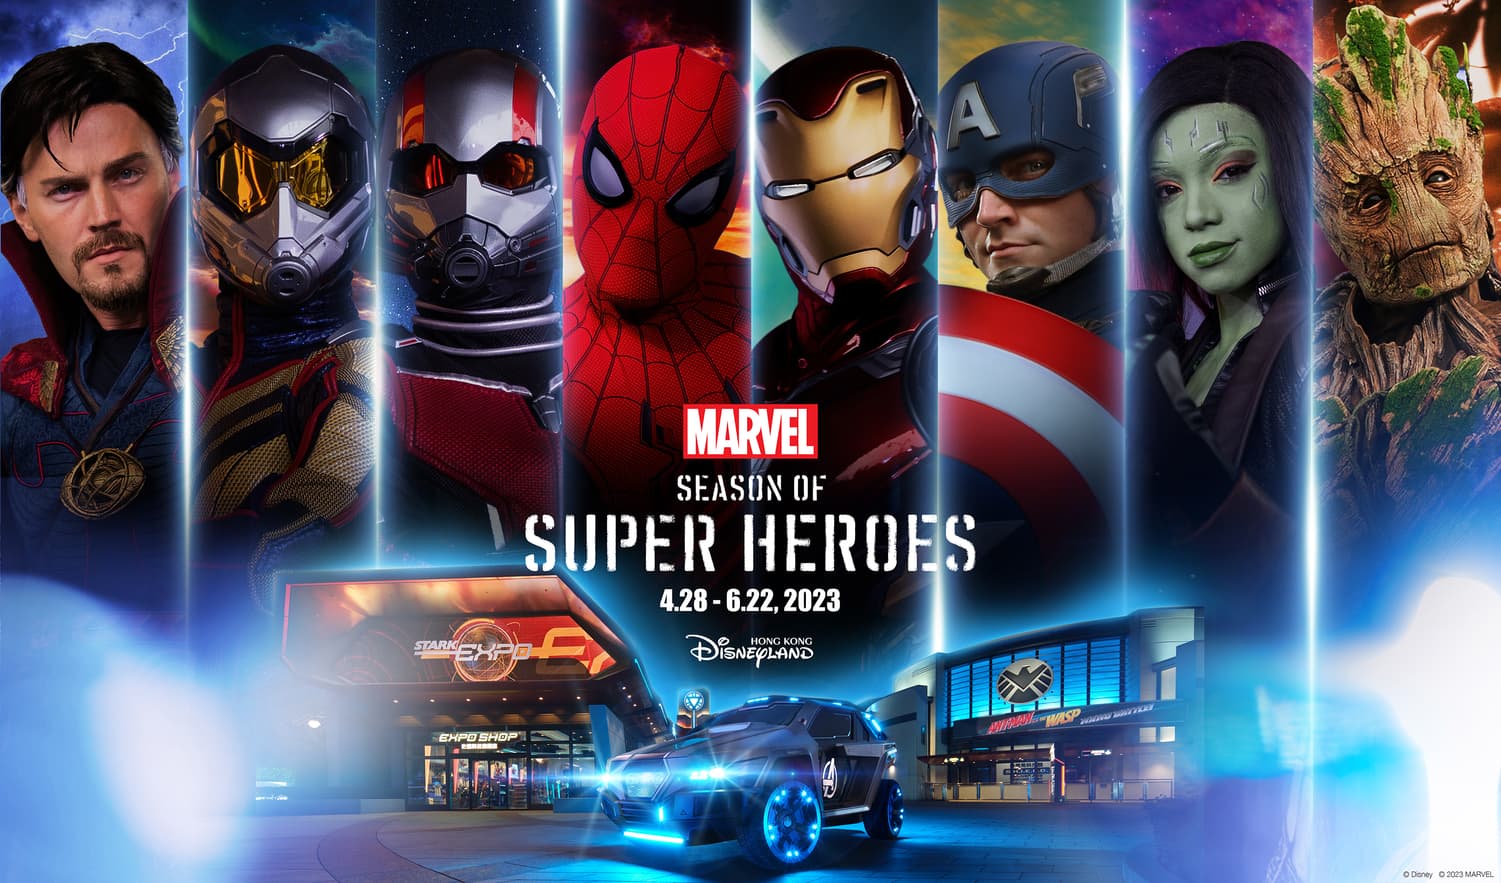 Marvel Season of Super Heroes